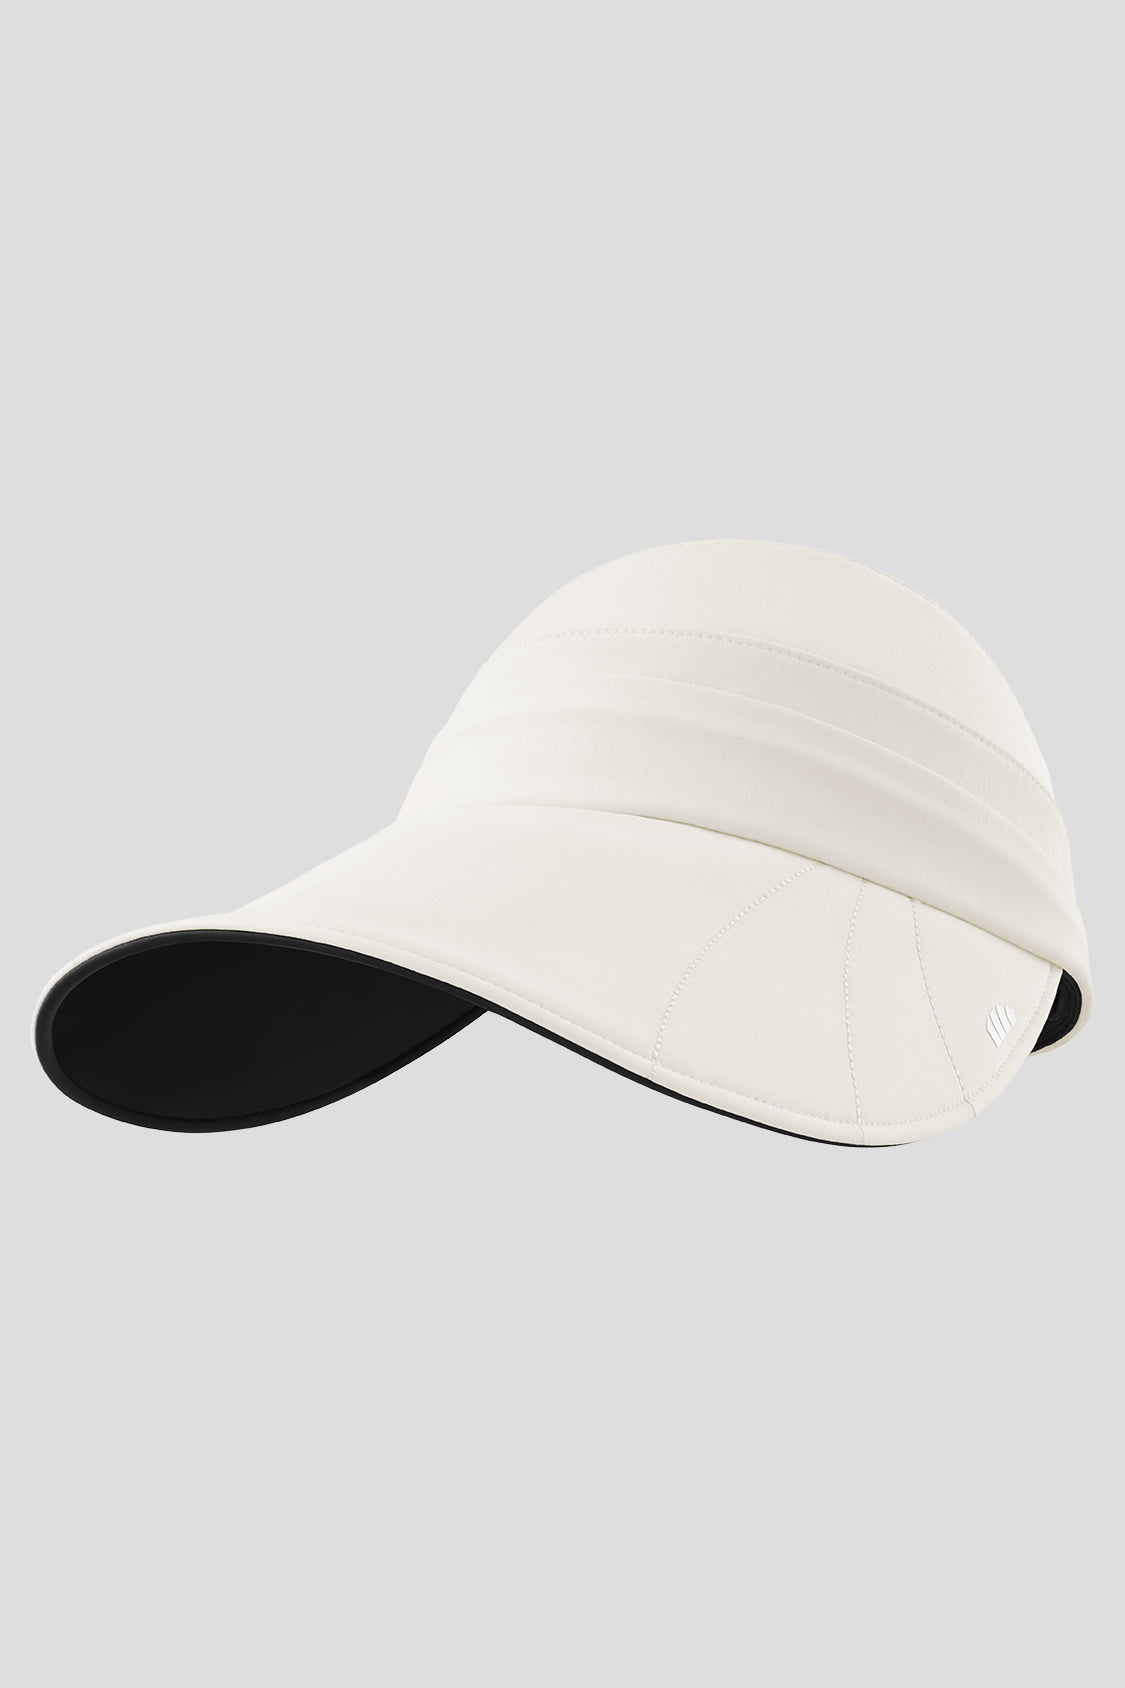 beneudner women's sun hats upf50+ #color_coconut white